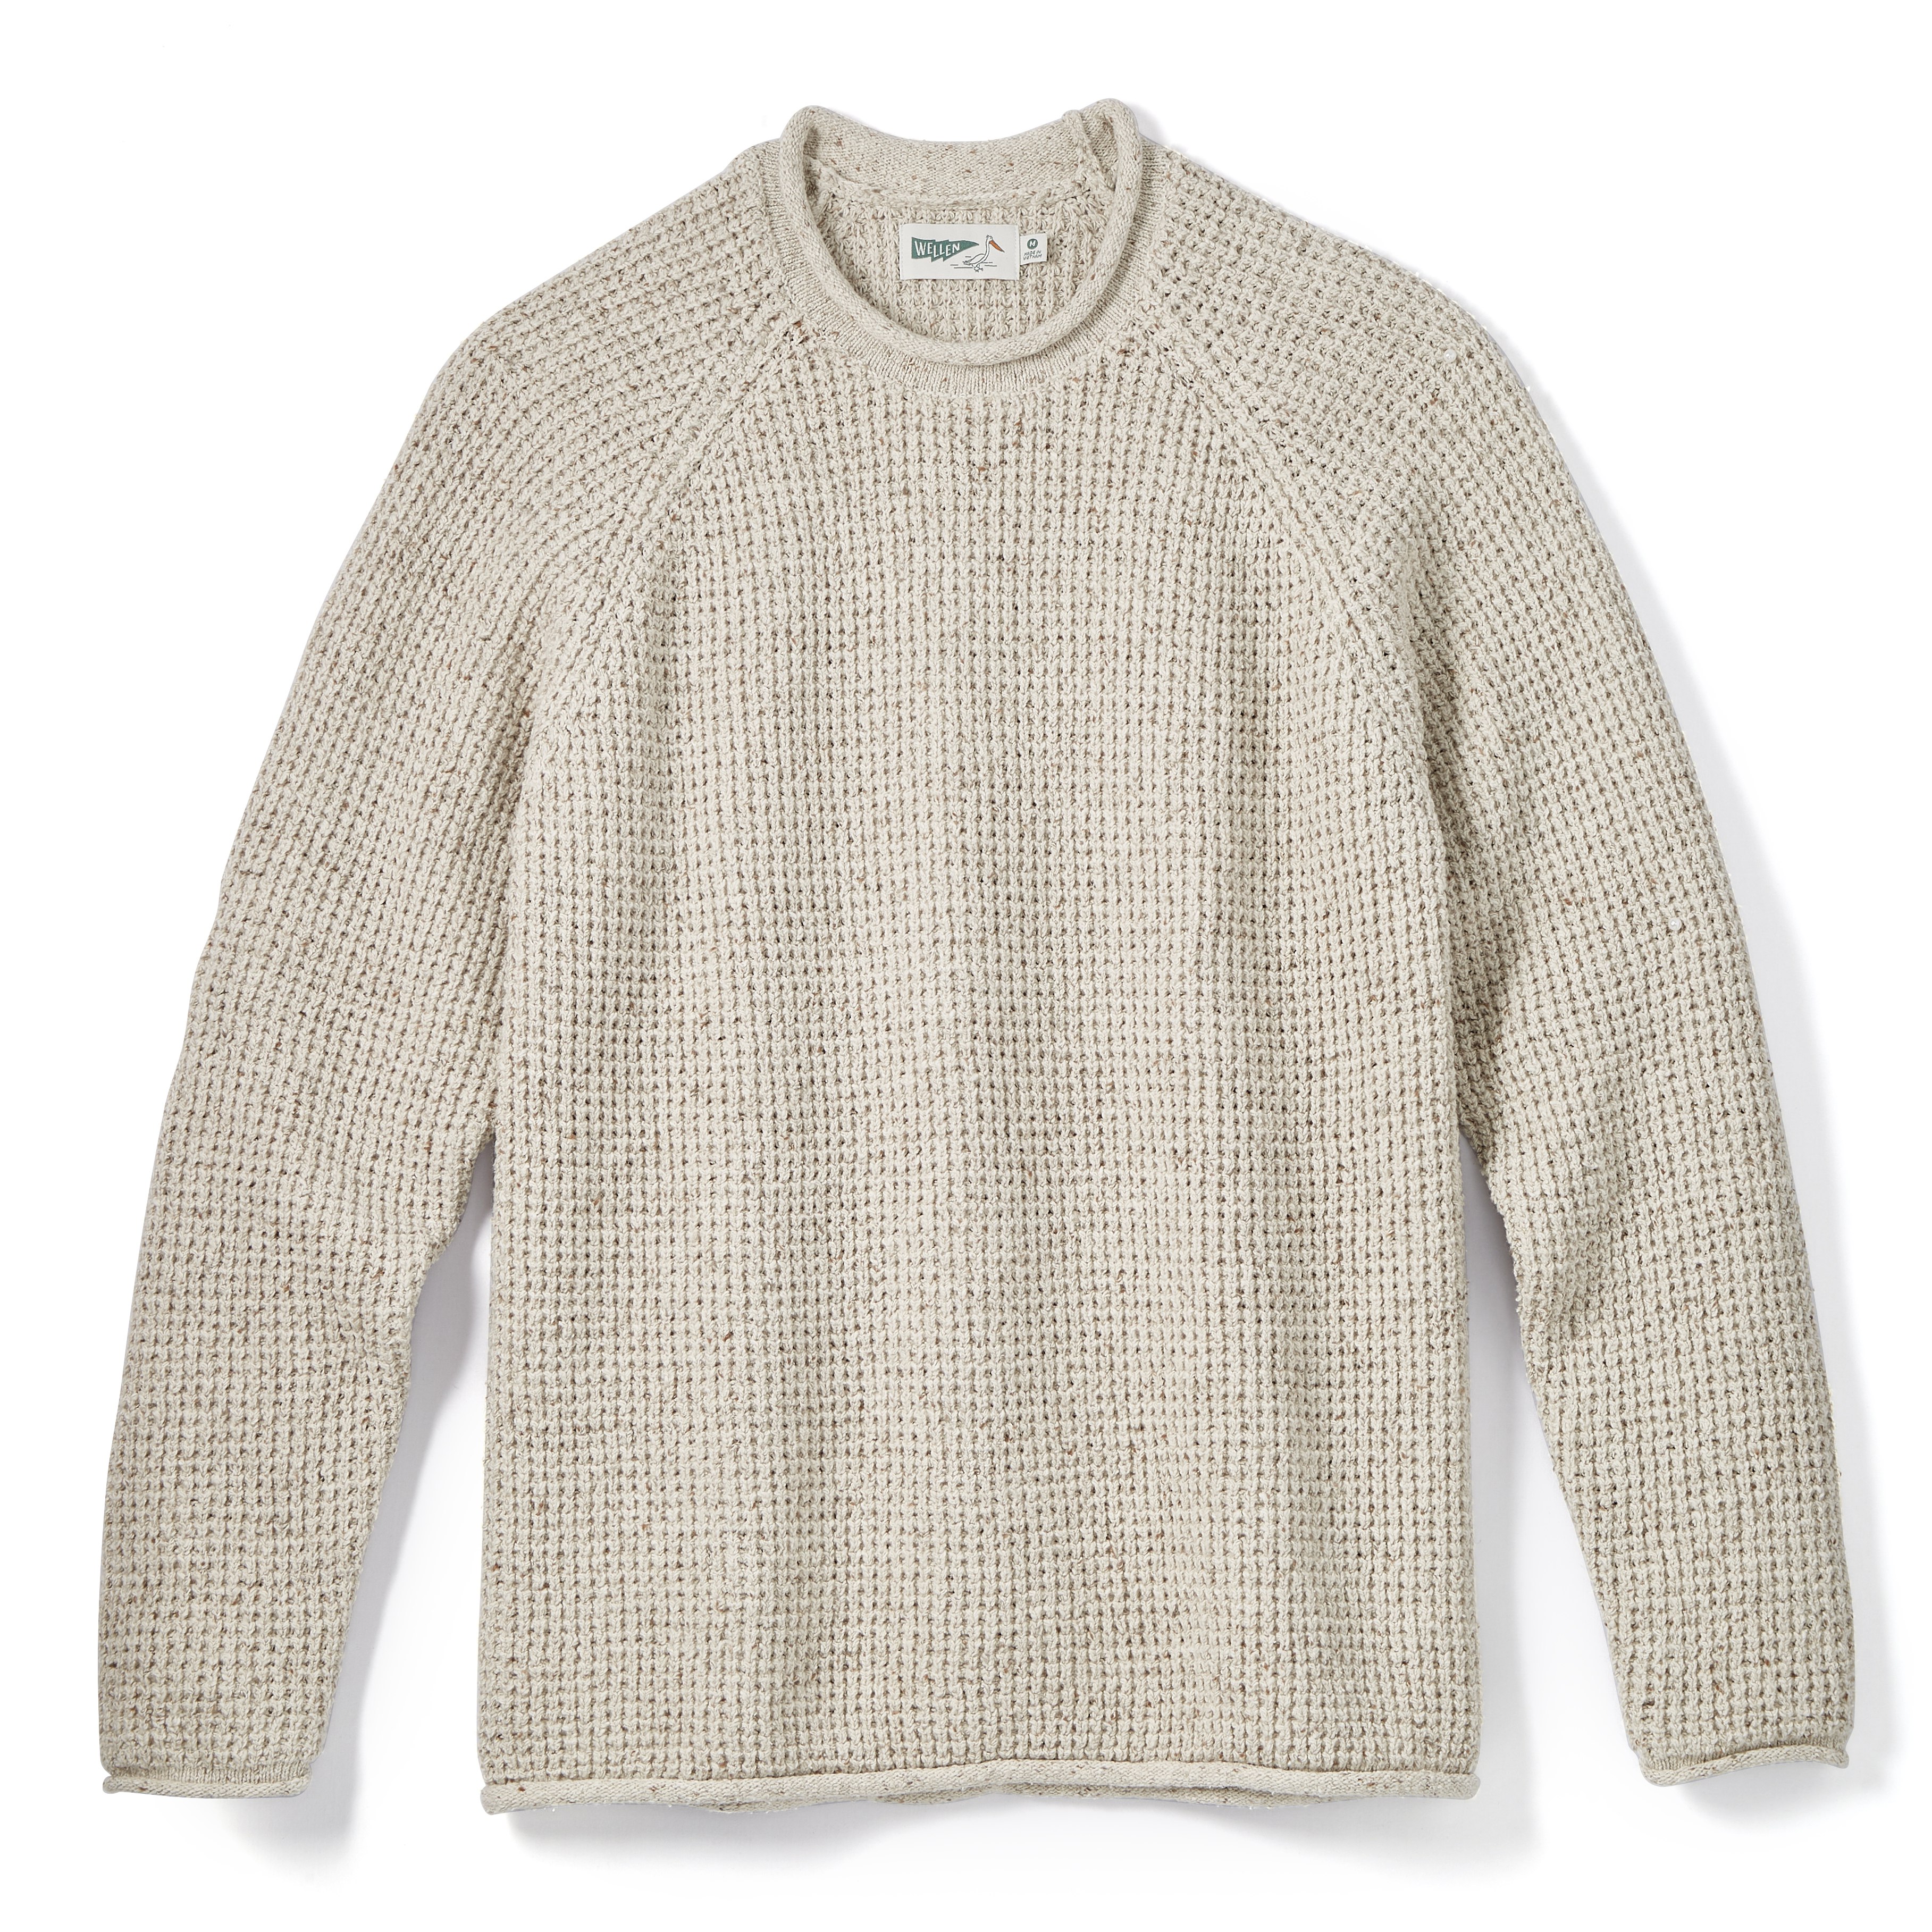 Wellen Recycled Cotton Headlands Rollneck Sweater - Heather Bone